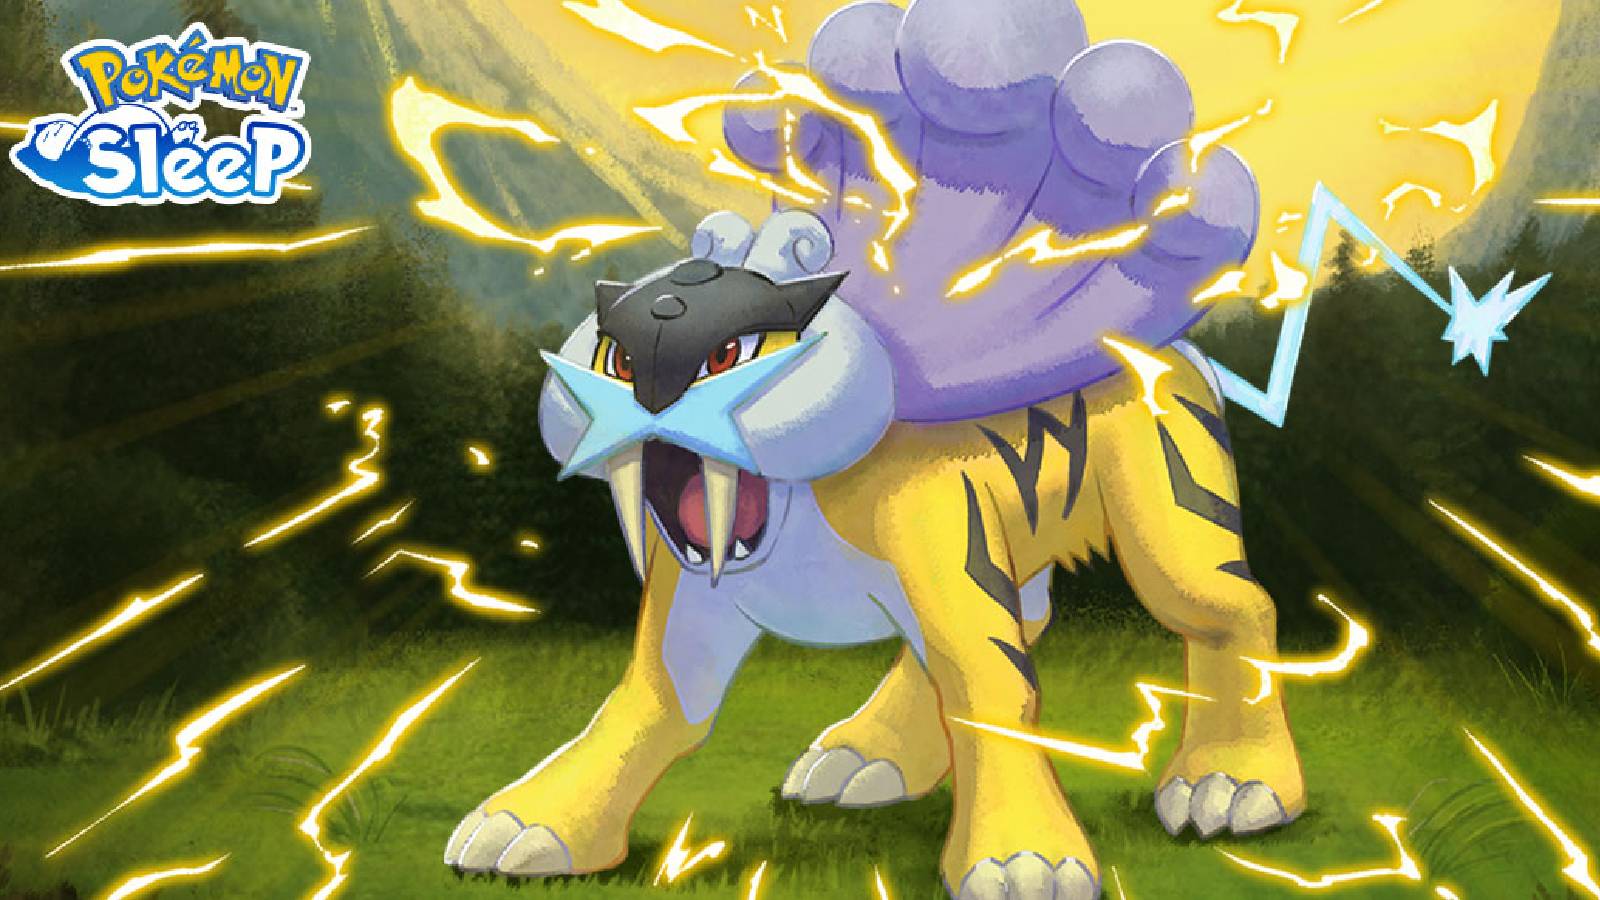 Promotional artwork for Pokemon Sleep shows the Legendary beast Raikou